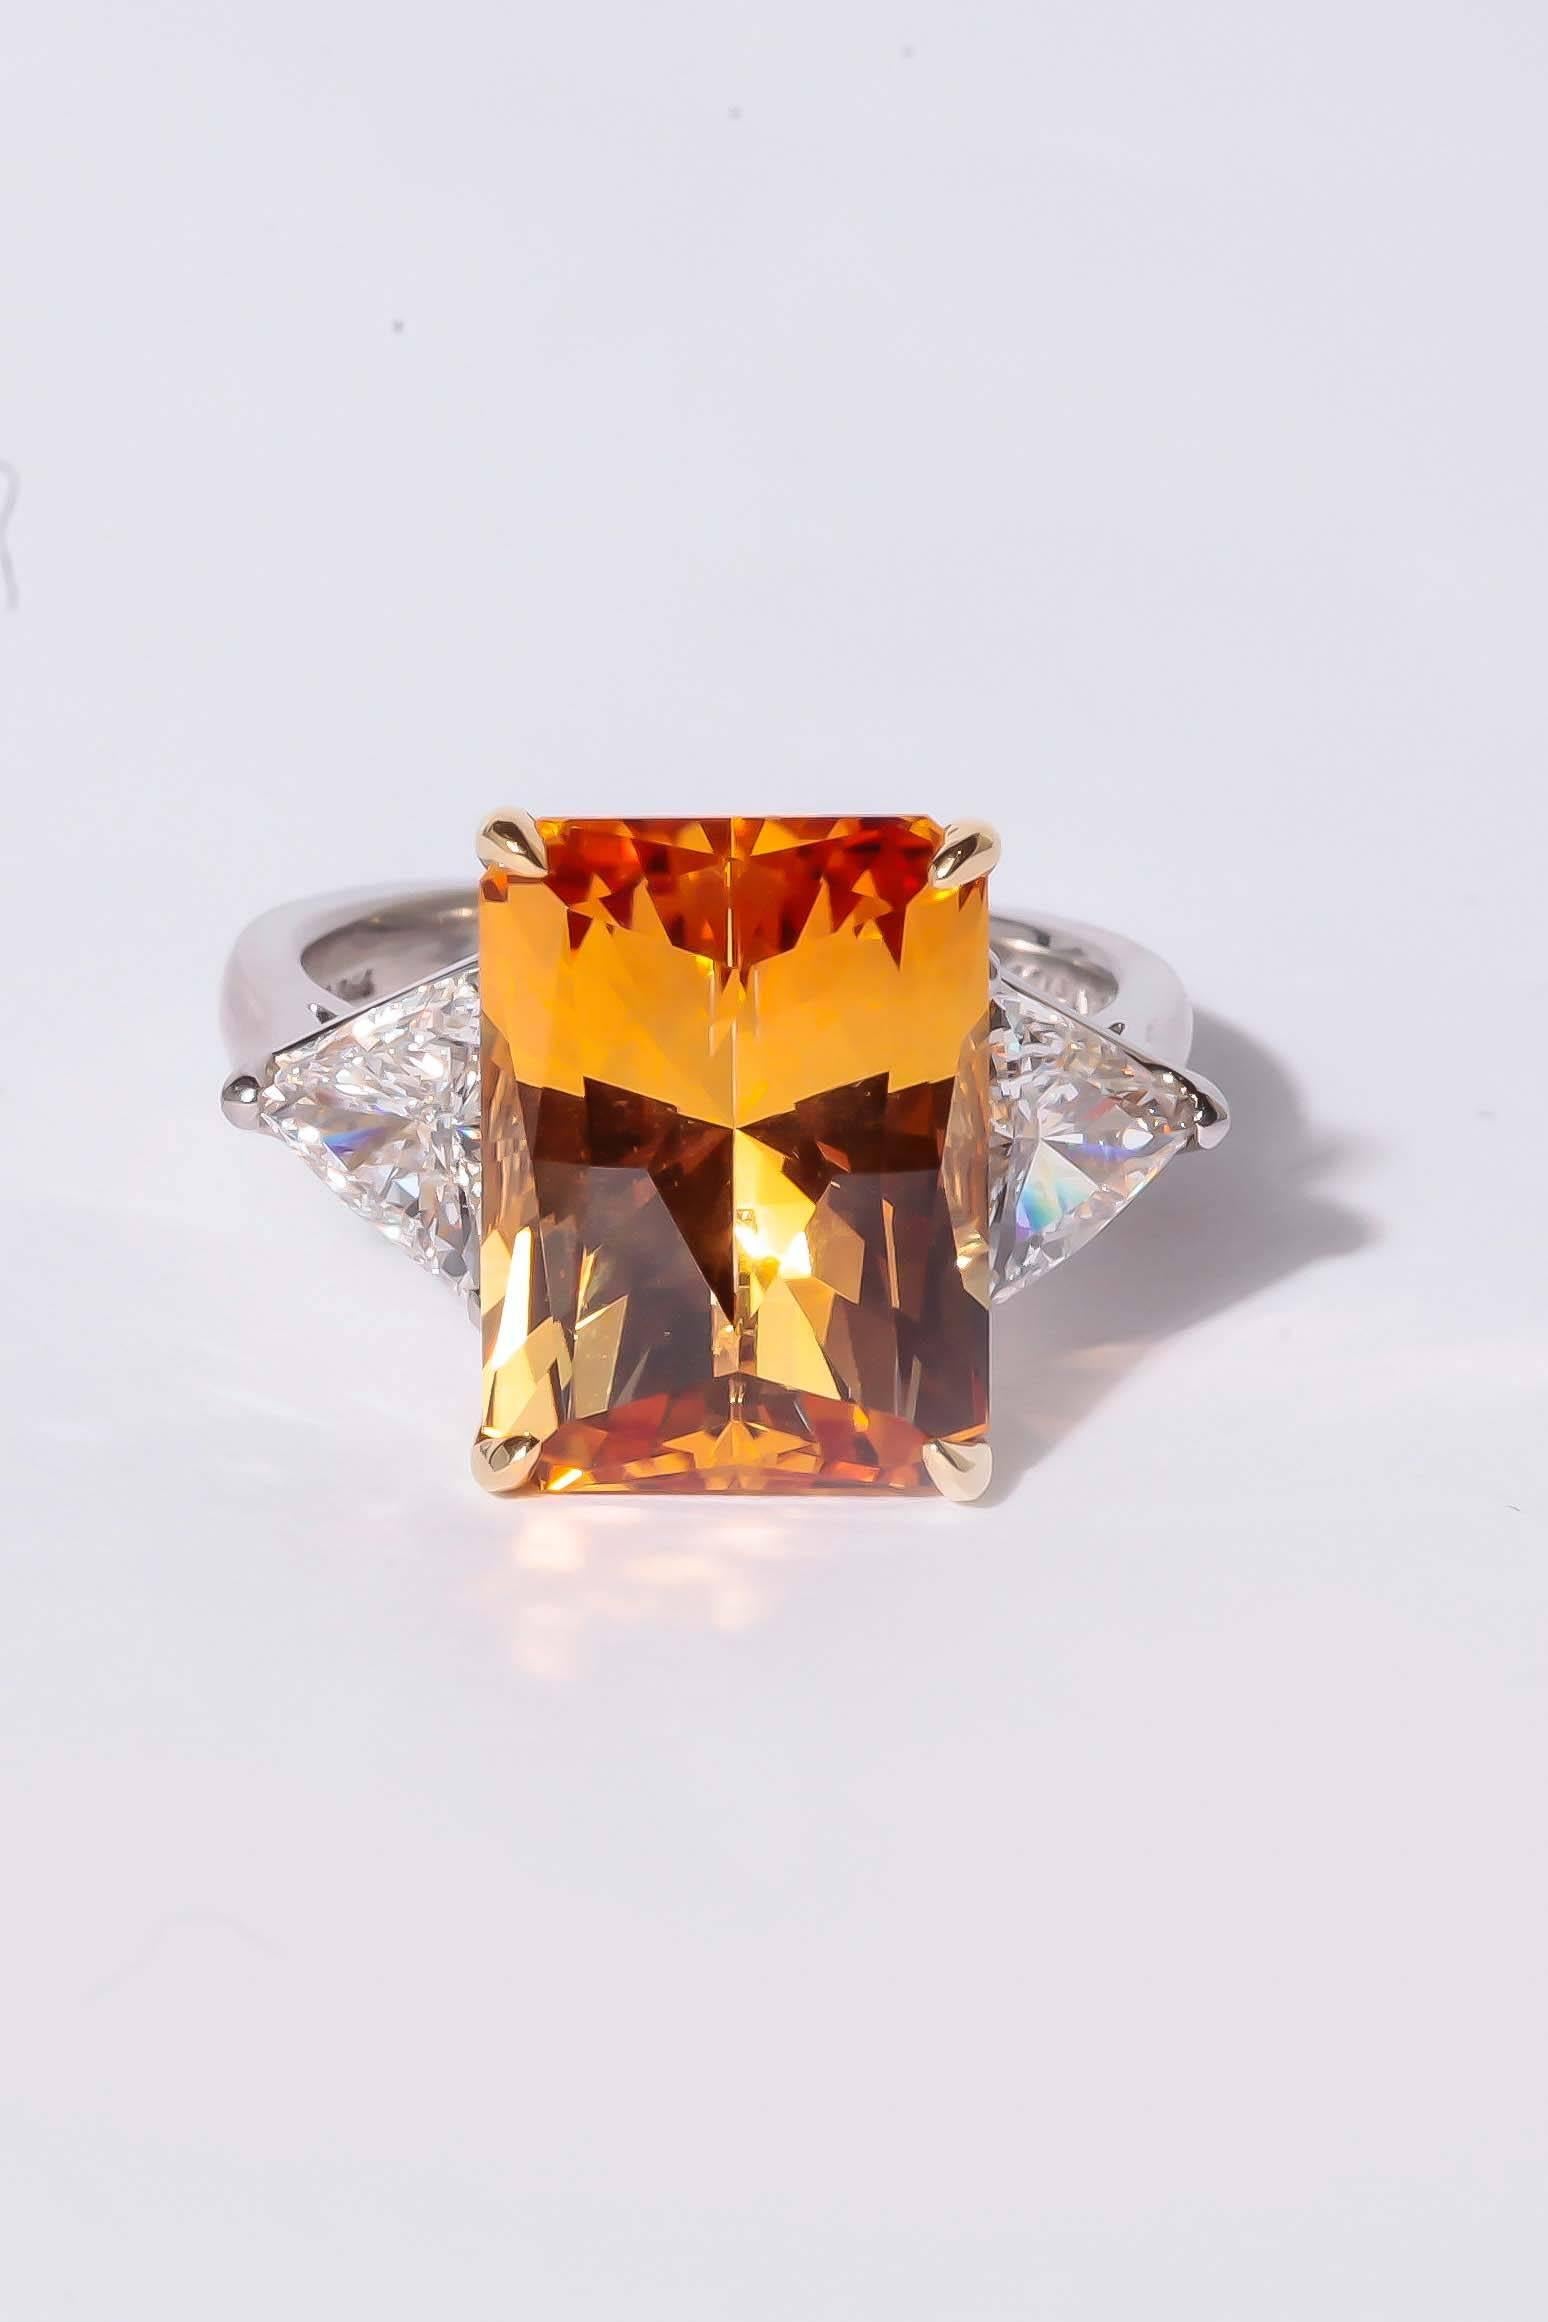 Richard Krementz Precious Topaz Diamond Platinum Ring For Sale 1